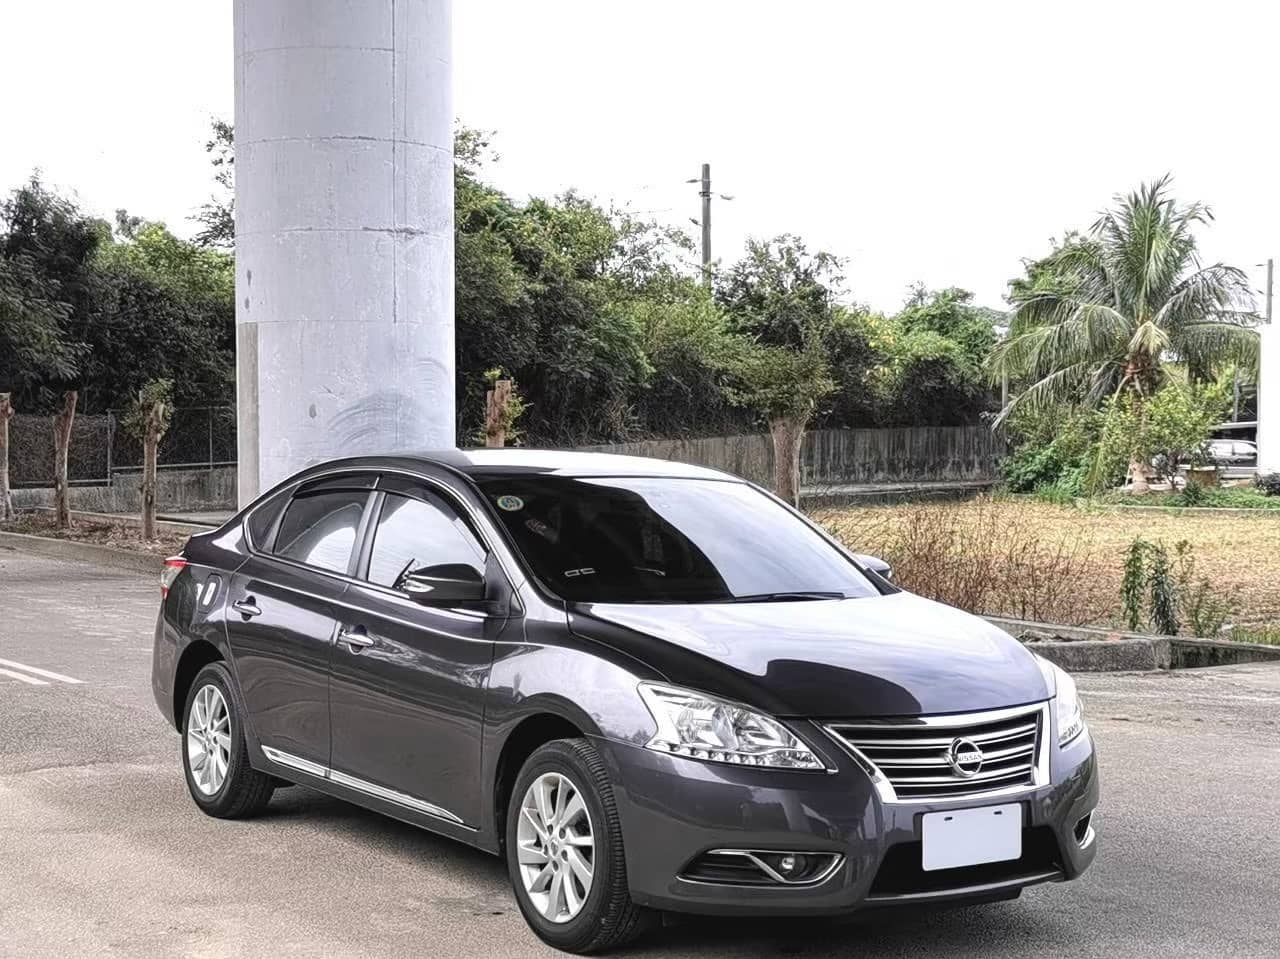 Nissan_usedcar_2015_Sentra_1.8_160899km_Nissan中古車_Sentra_圖片